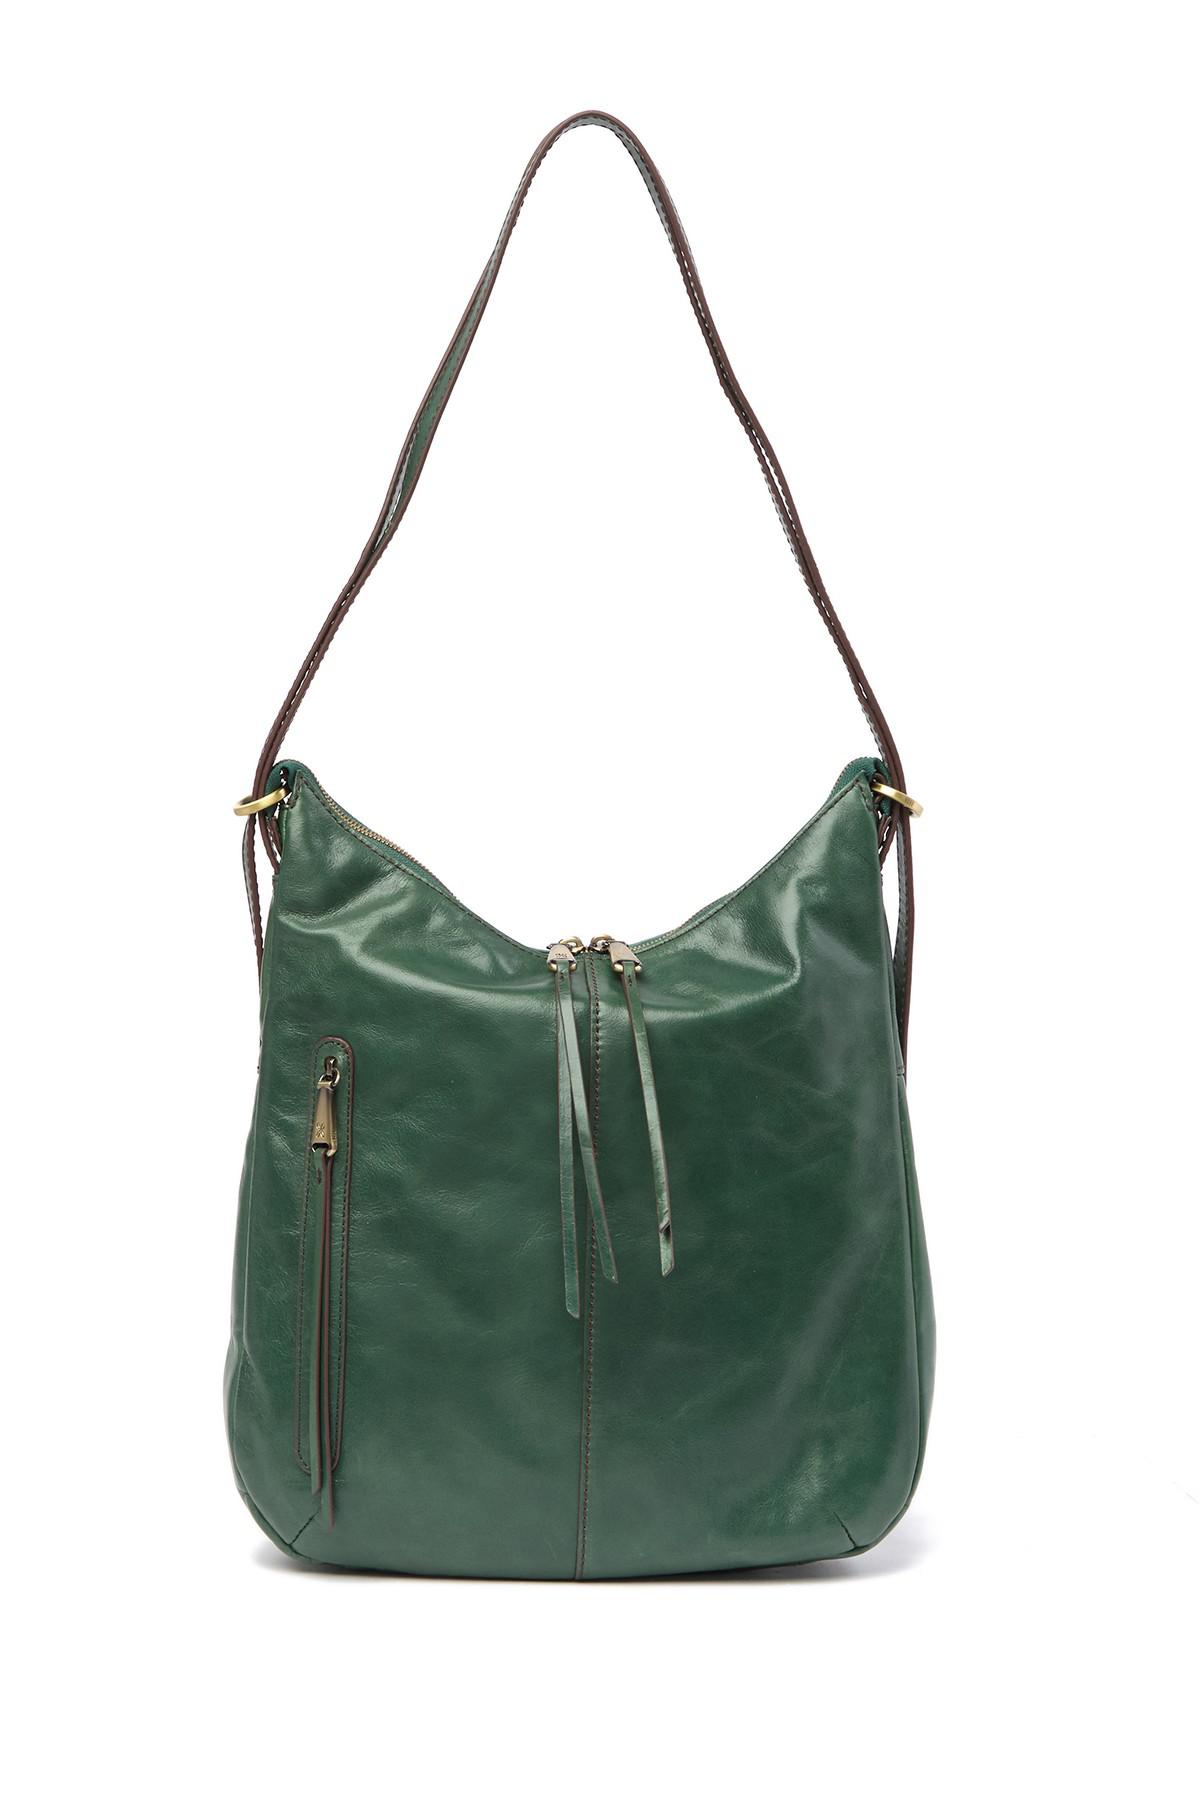 Hobo International Merrin Leather Convertible Backpack in Green